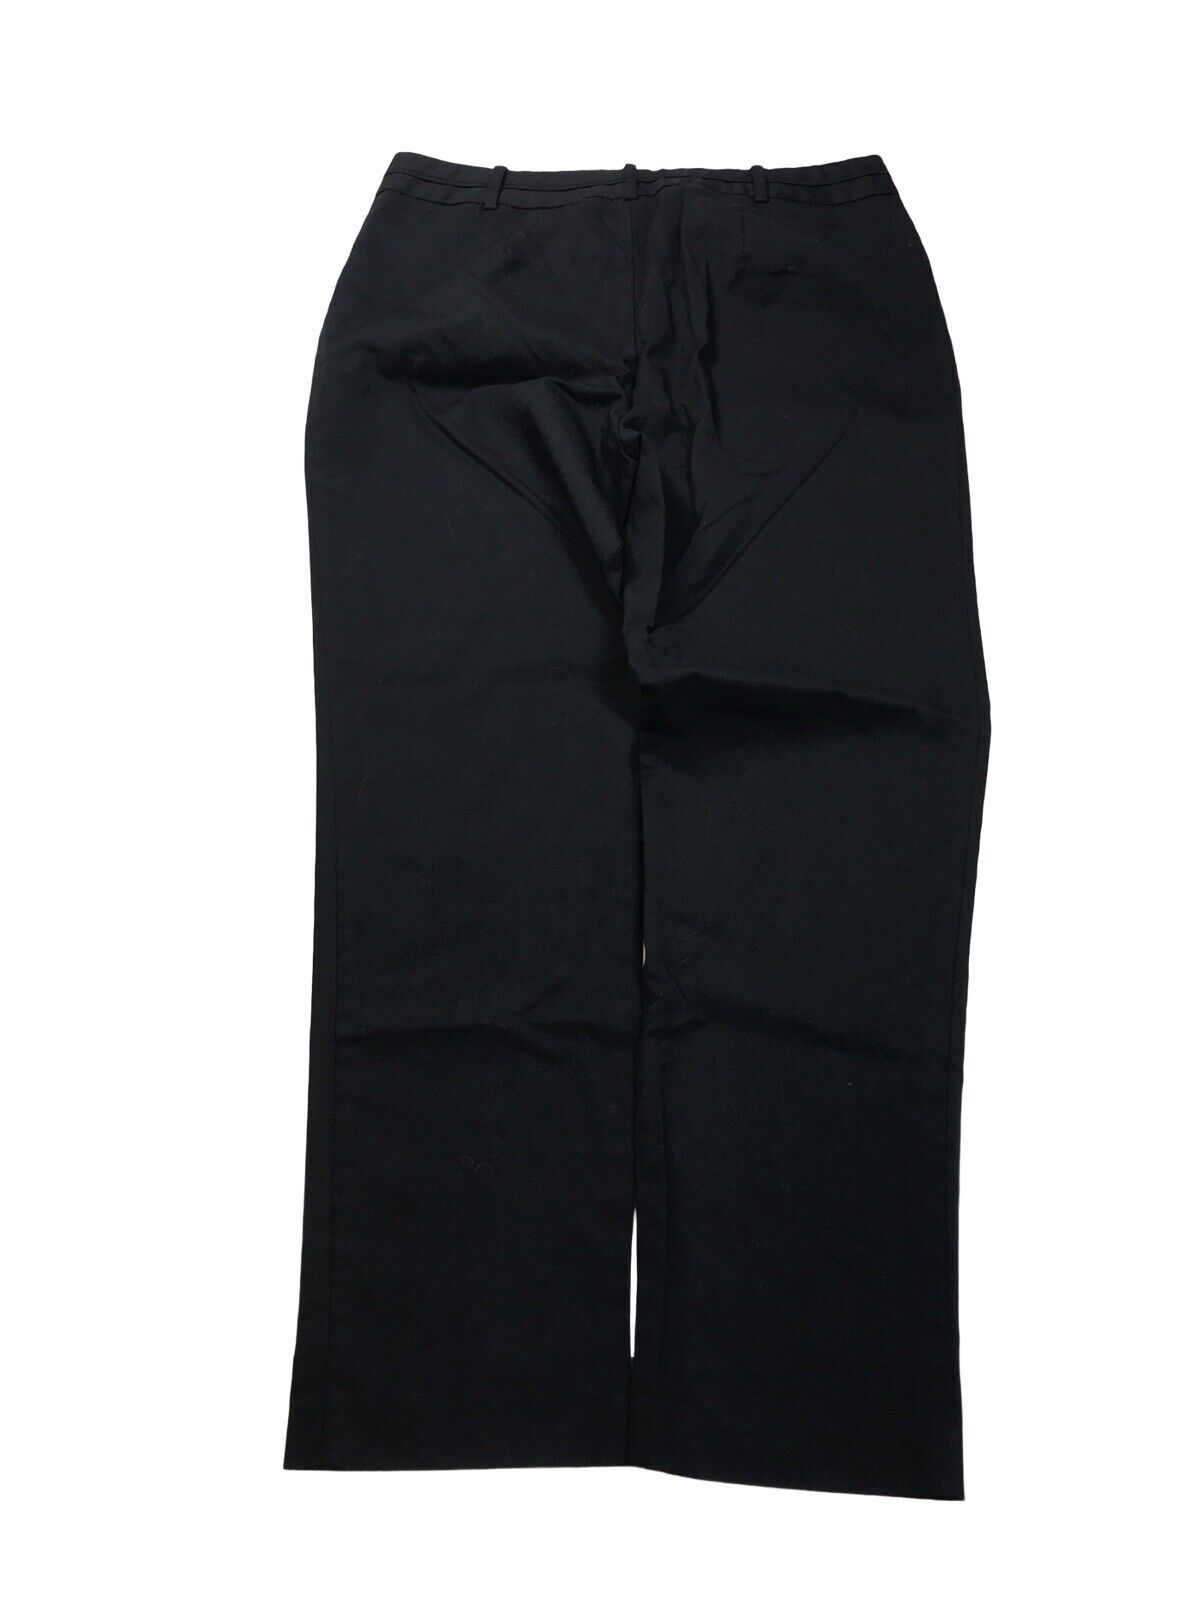 Calvin Klein Women's Black Straight Leg Dress Pants - 10